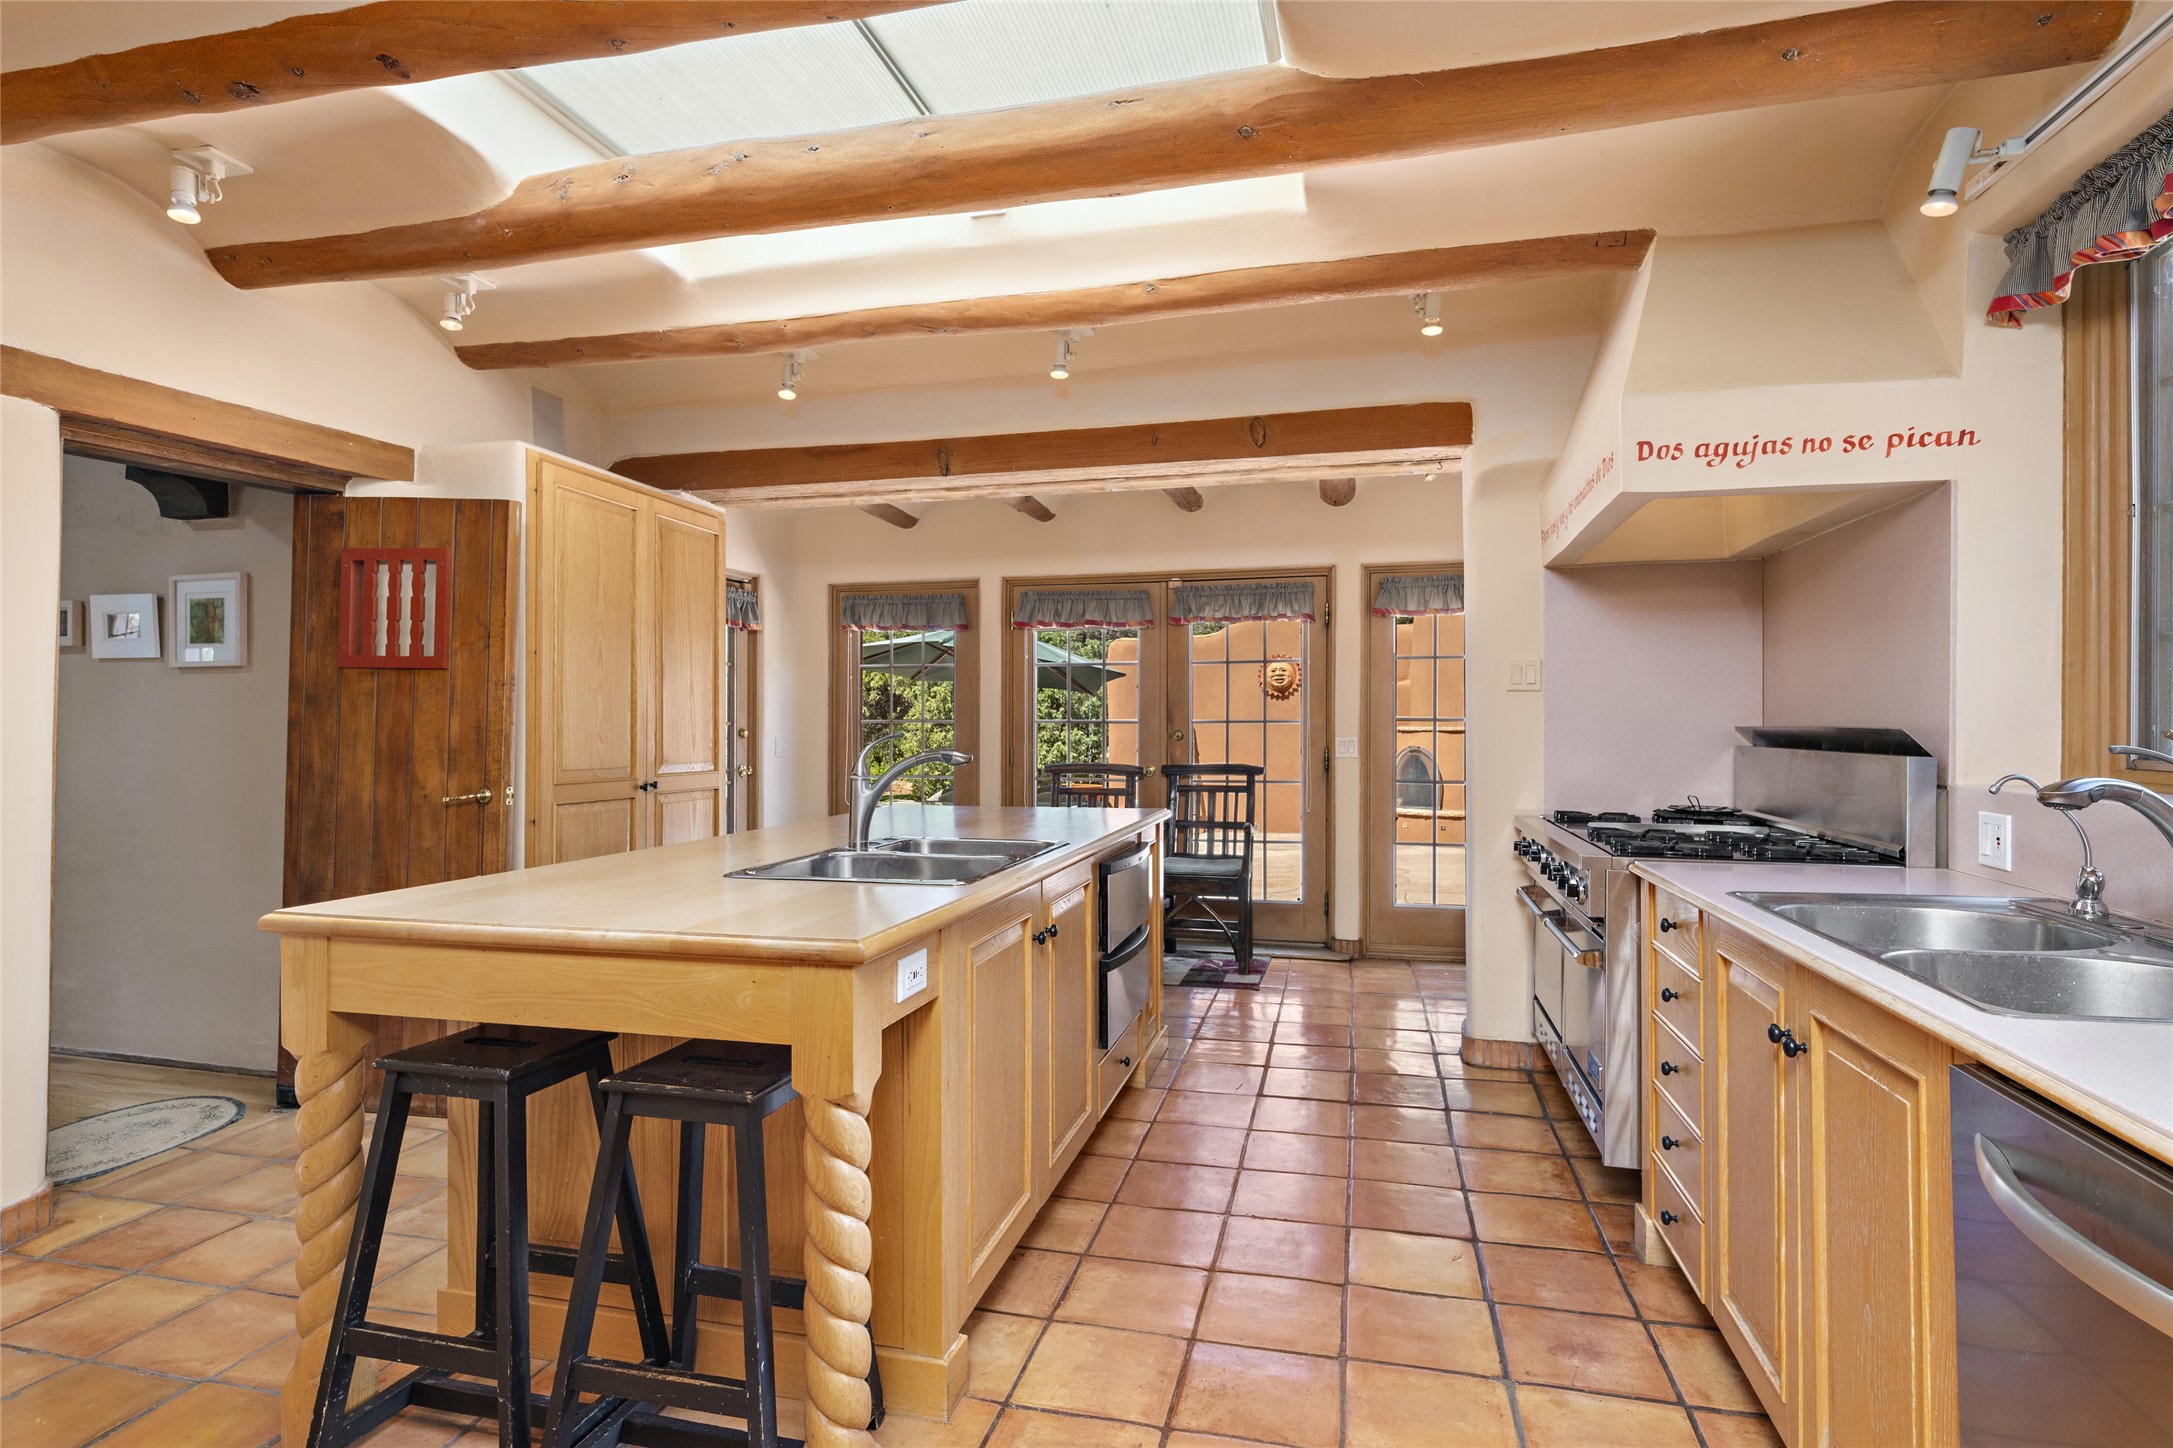 Main house kitchen with wood island and Viking range